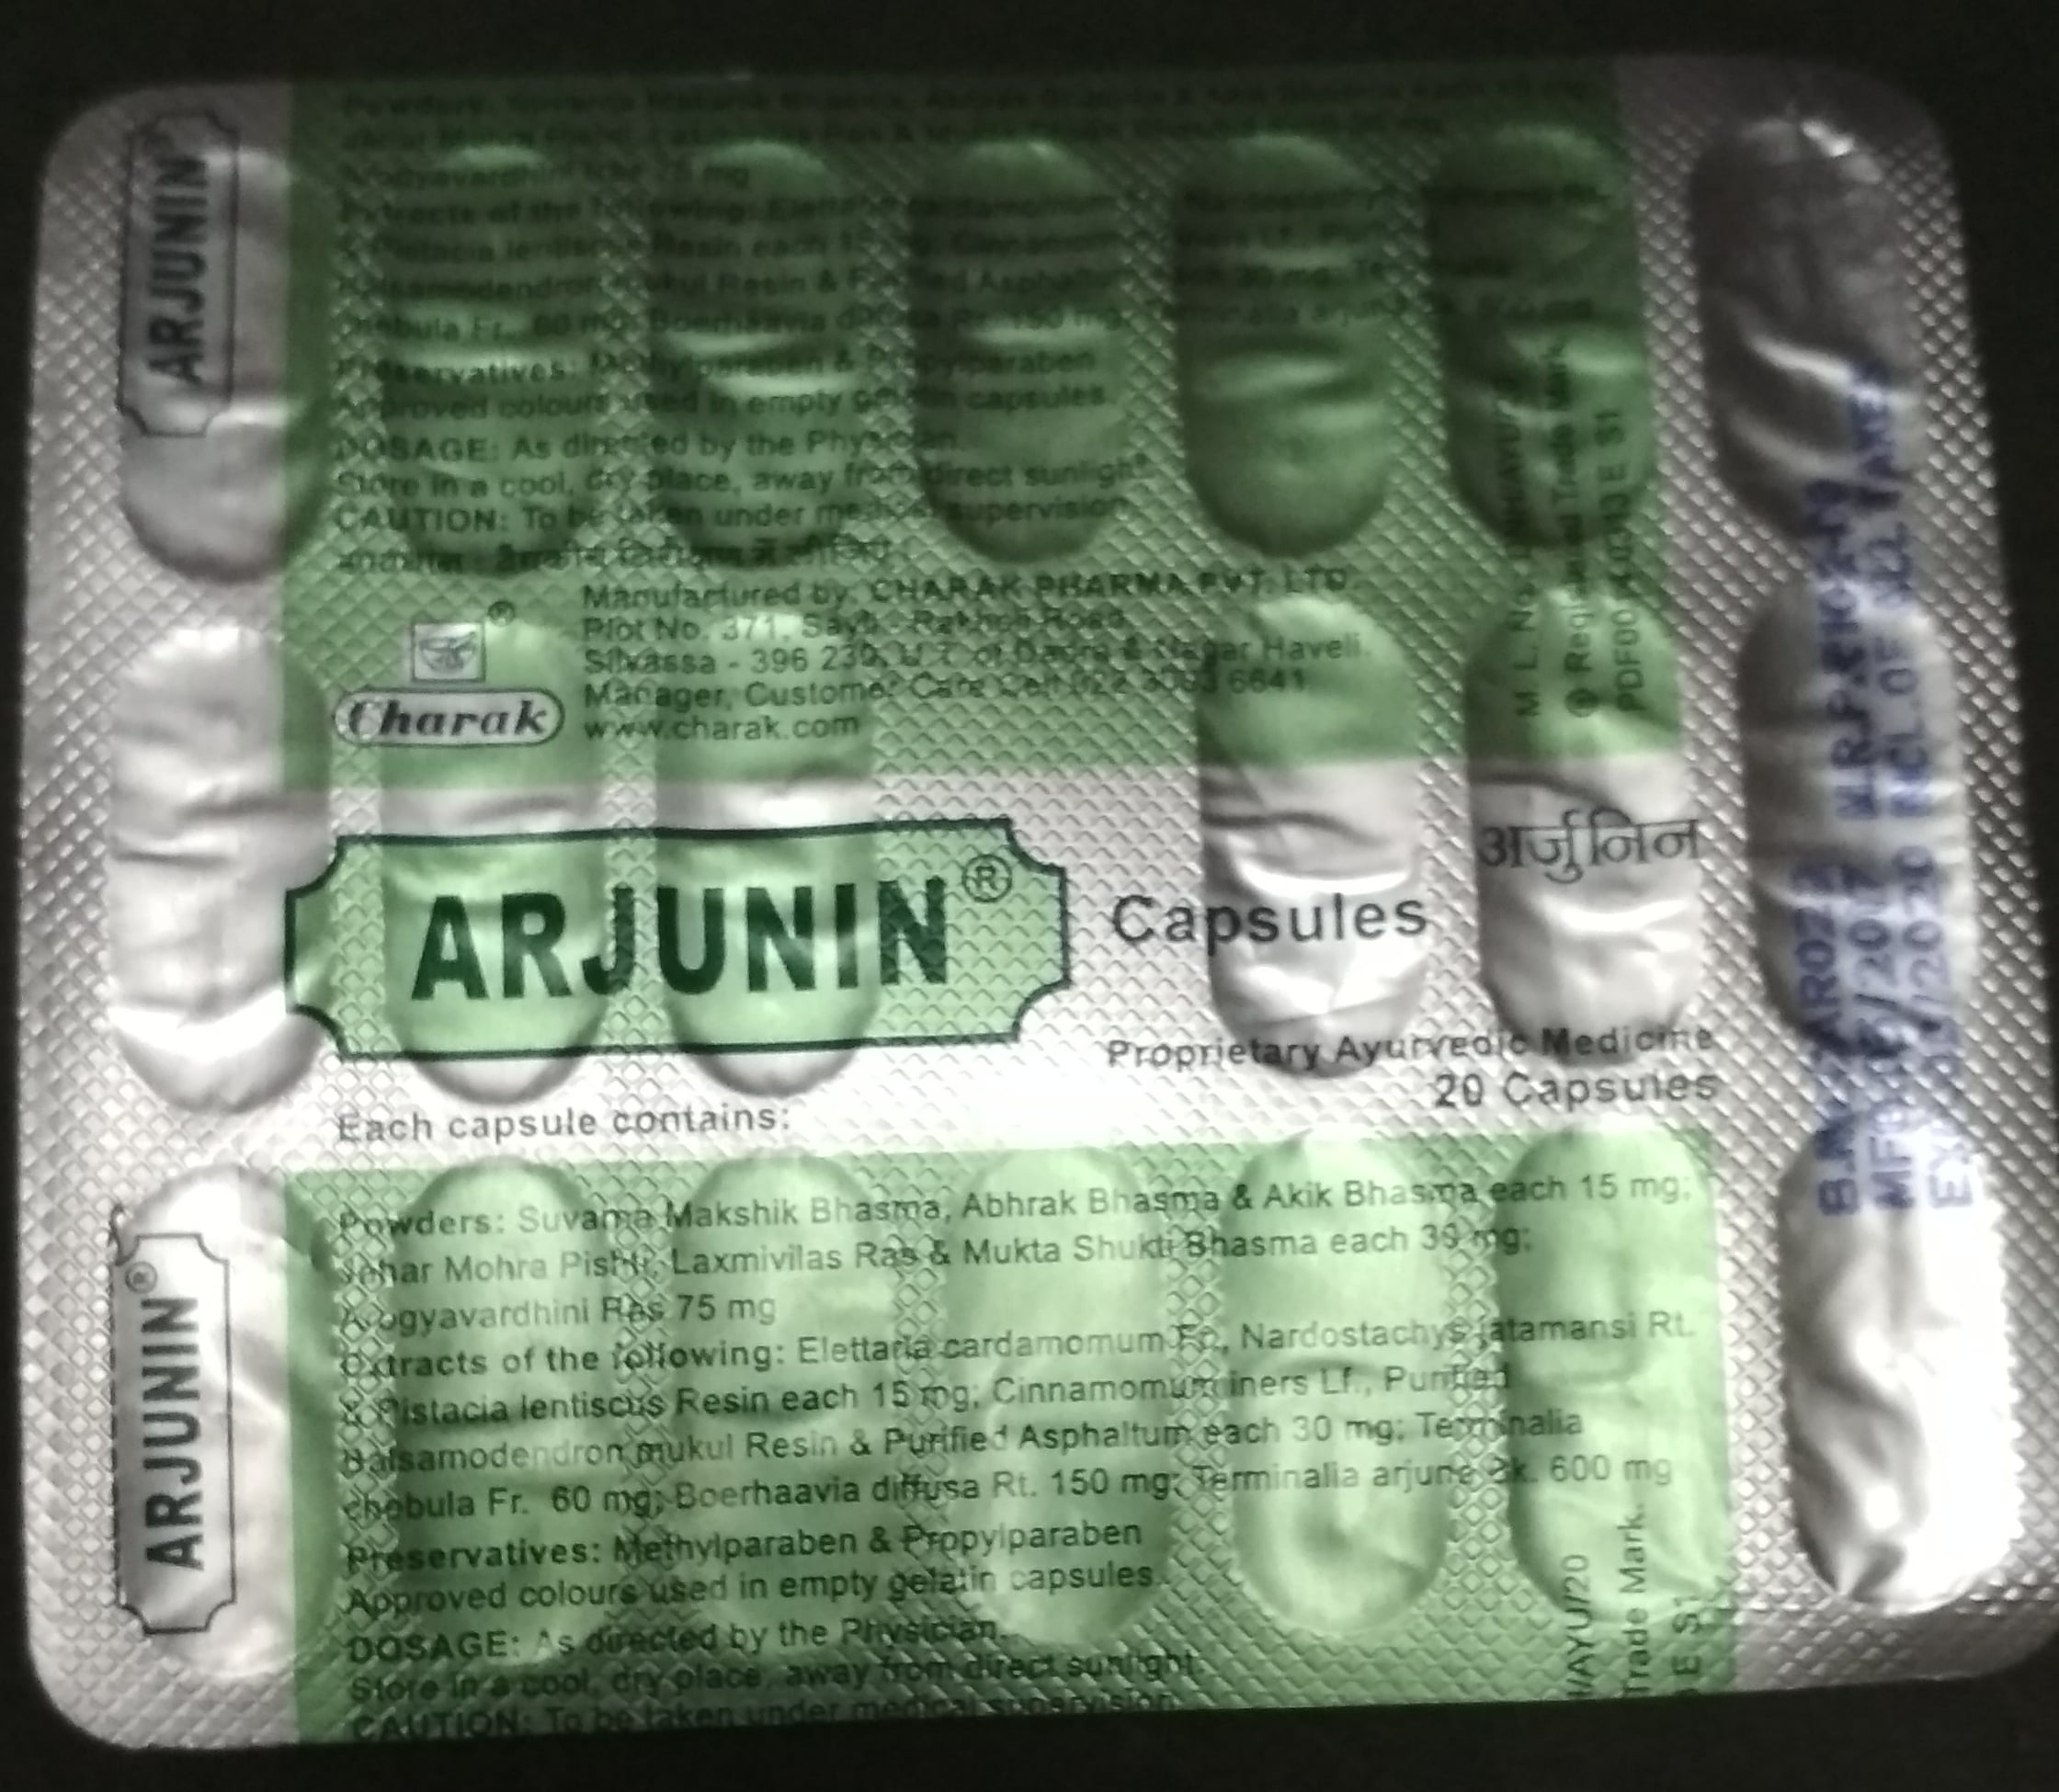 arjunin capsules 20cap upto 15% off Charak phytonova